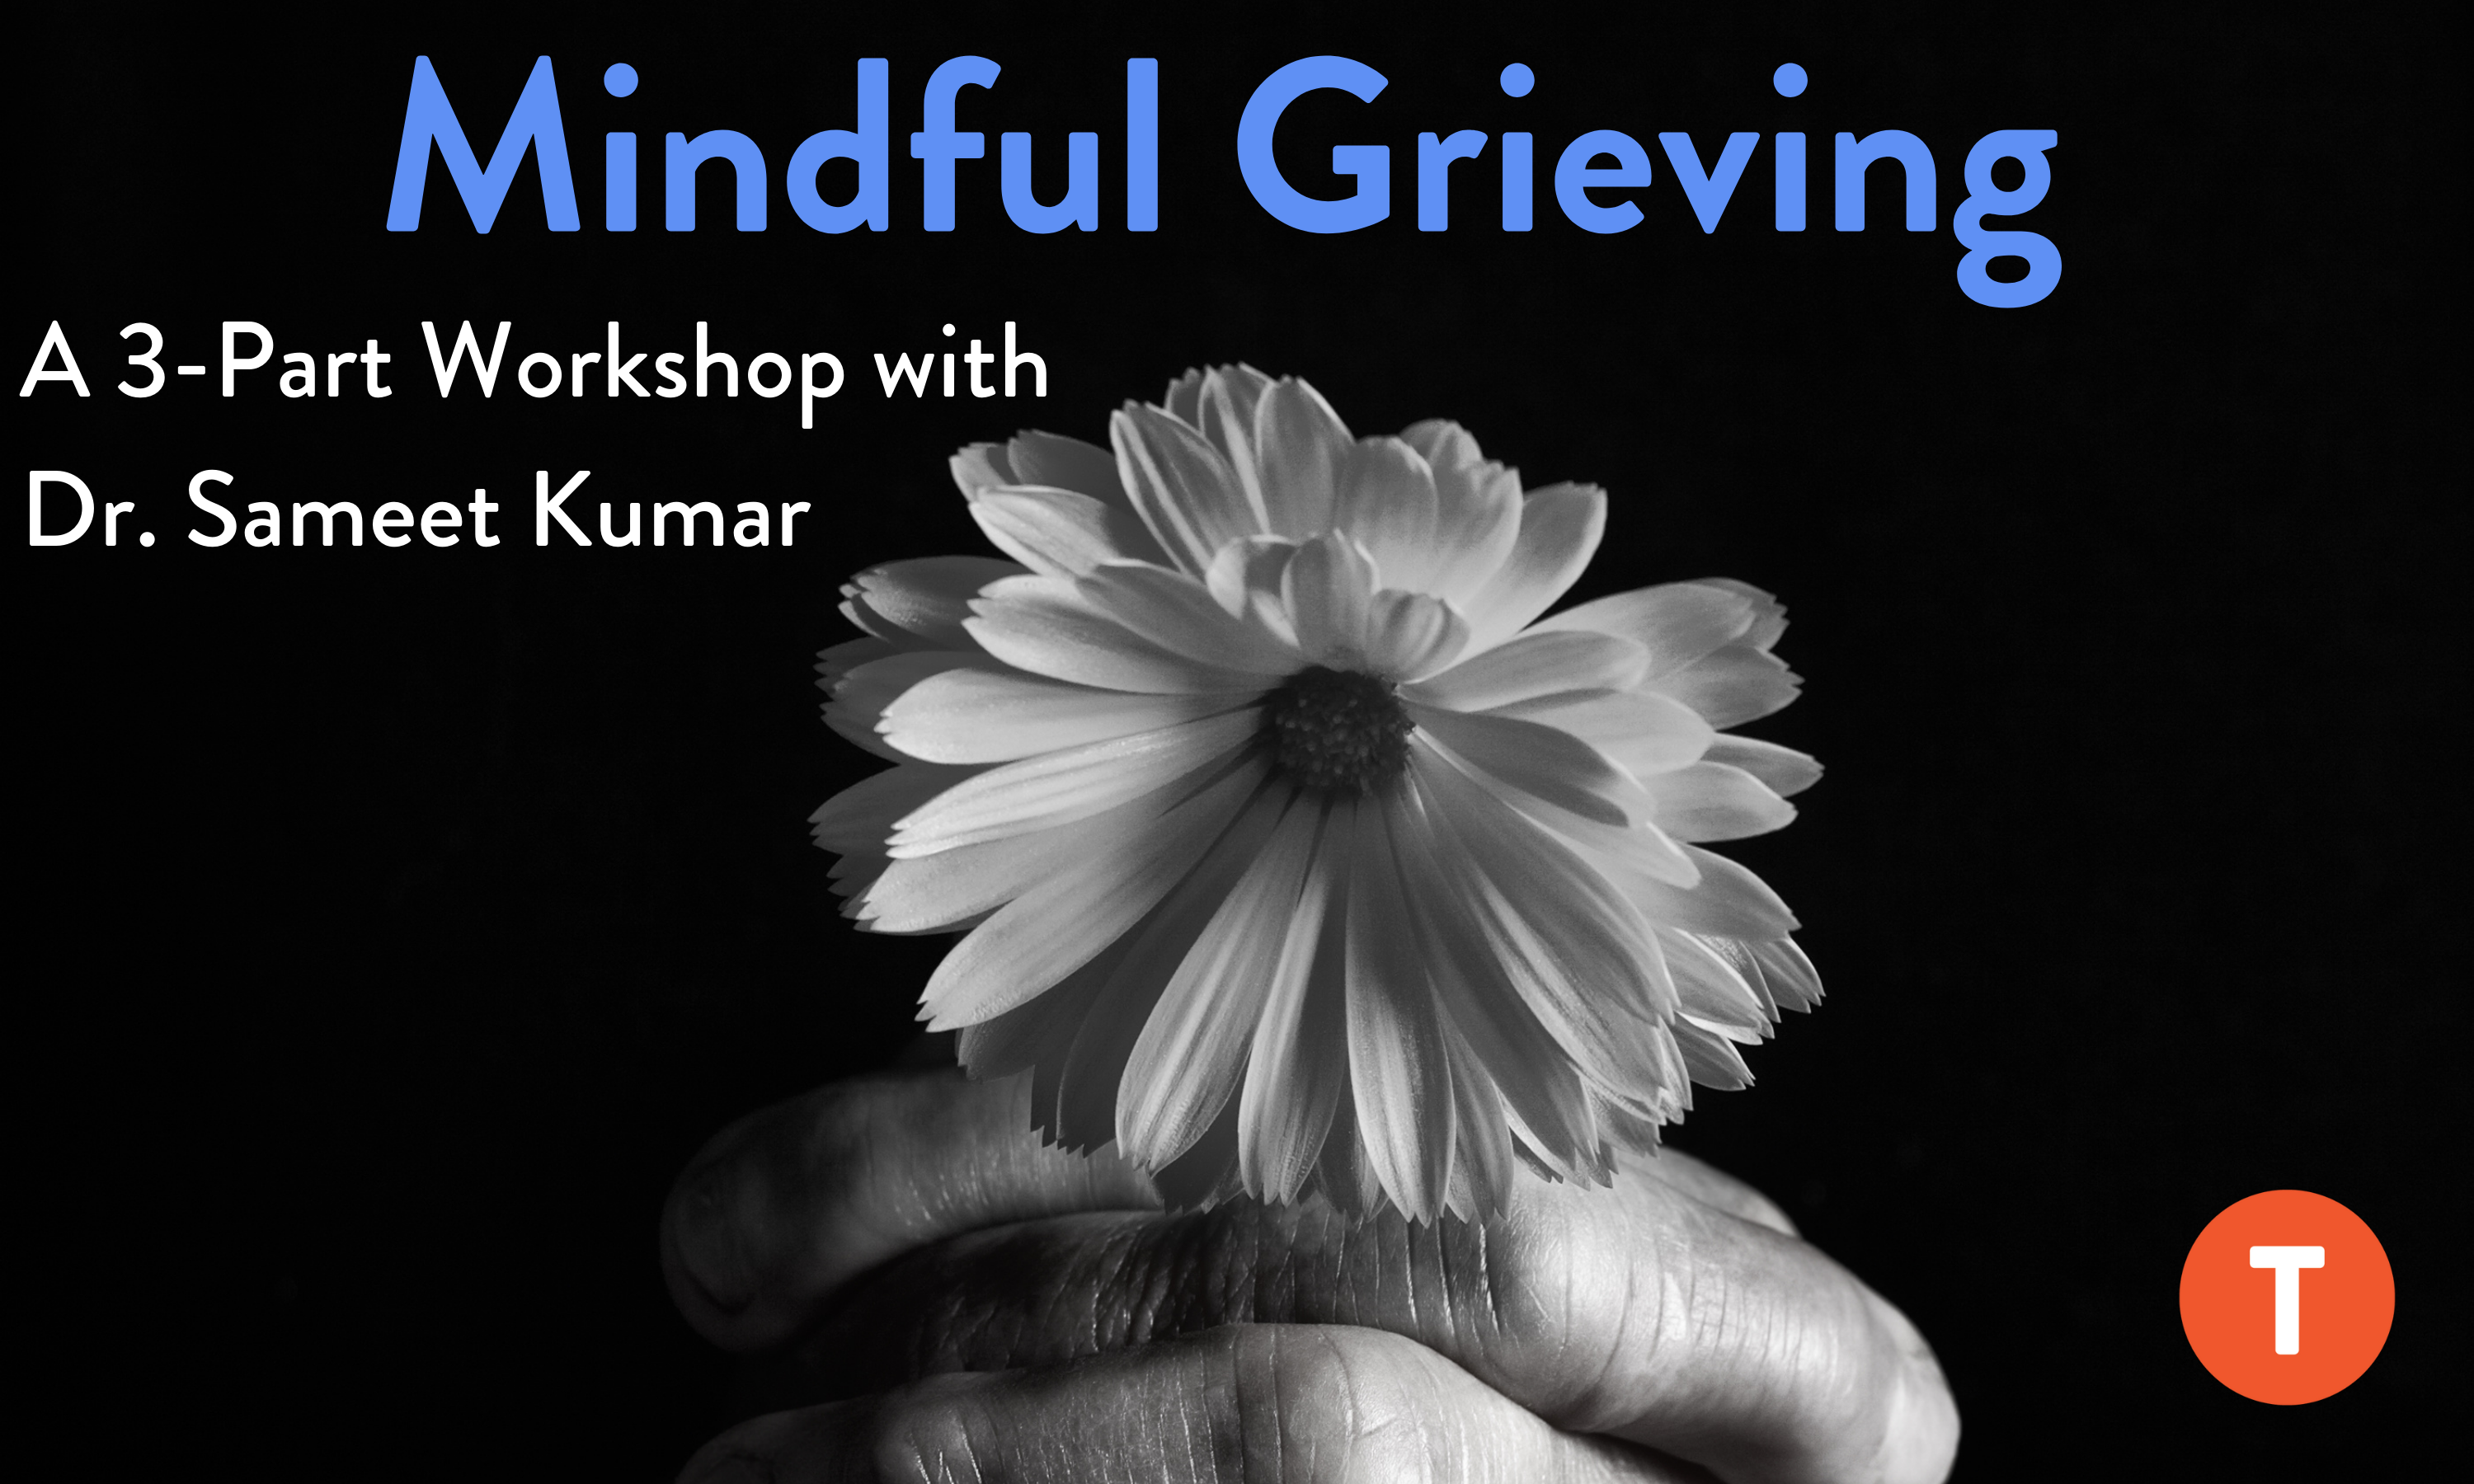 Mindful Grieving: a 3-part workshop with Dr. Sameet Kumar